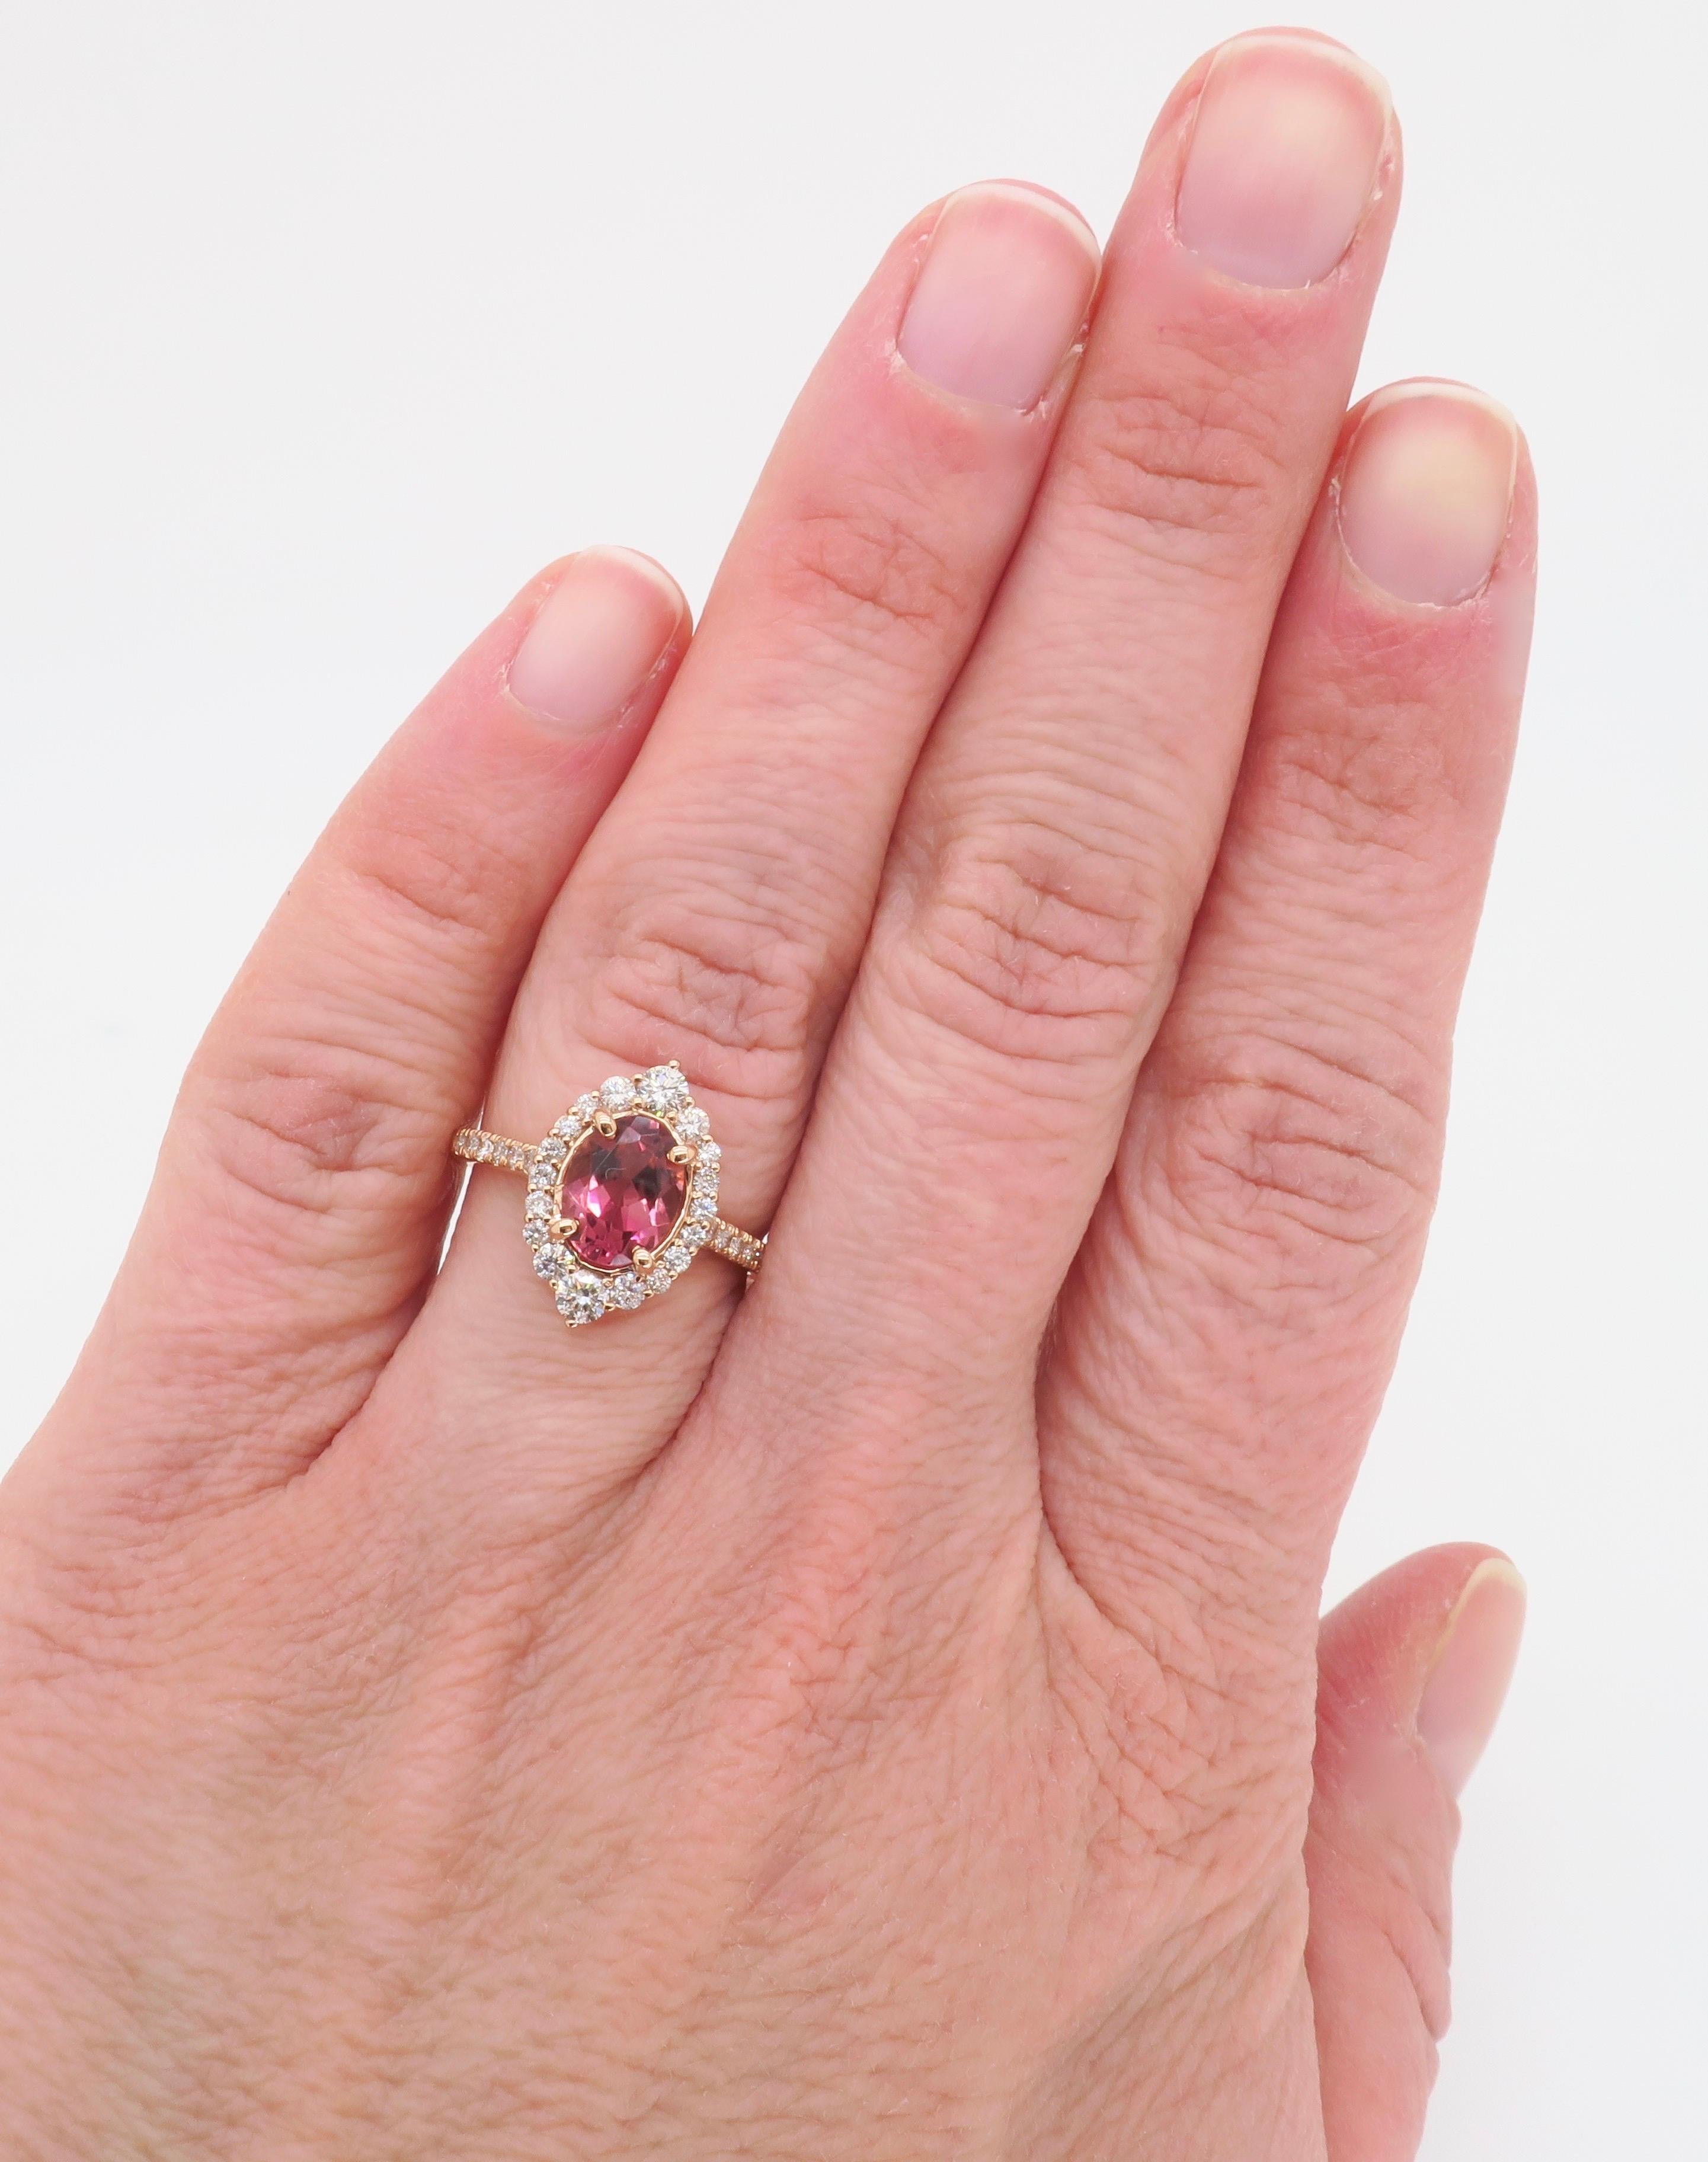 Pink Tourmaline & diamond halo ring made with a 1.18ct Pink Tourmaline, and .50ctw of Diamonds. 

Gemstone: Pink Tourmaline & Diamond
Diamond Carat Weight: .50CTW
Diamond Cut: Round Brilliant Cut  Diamonds
Pink Tourmaline Carat Weight: